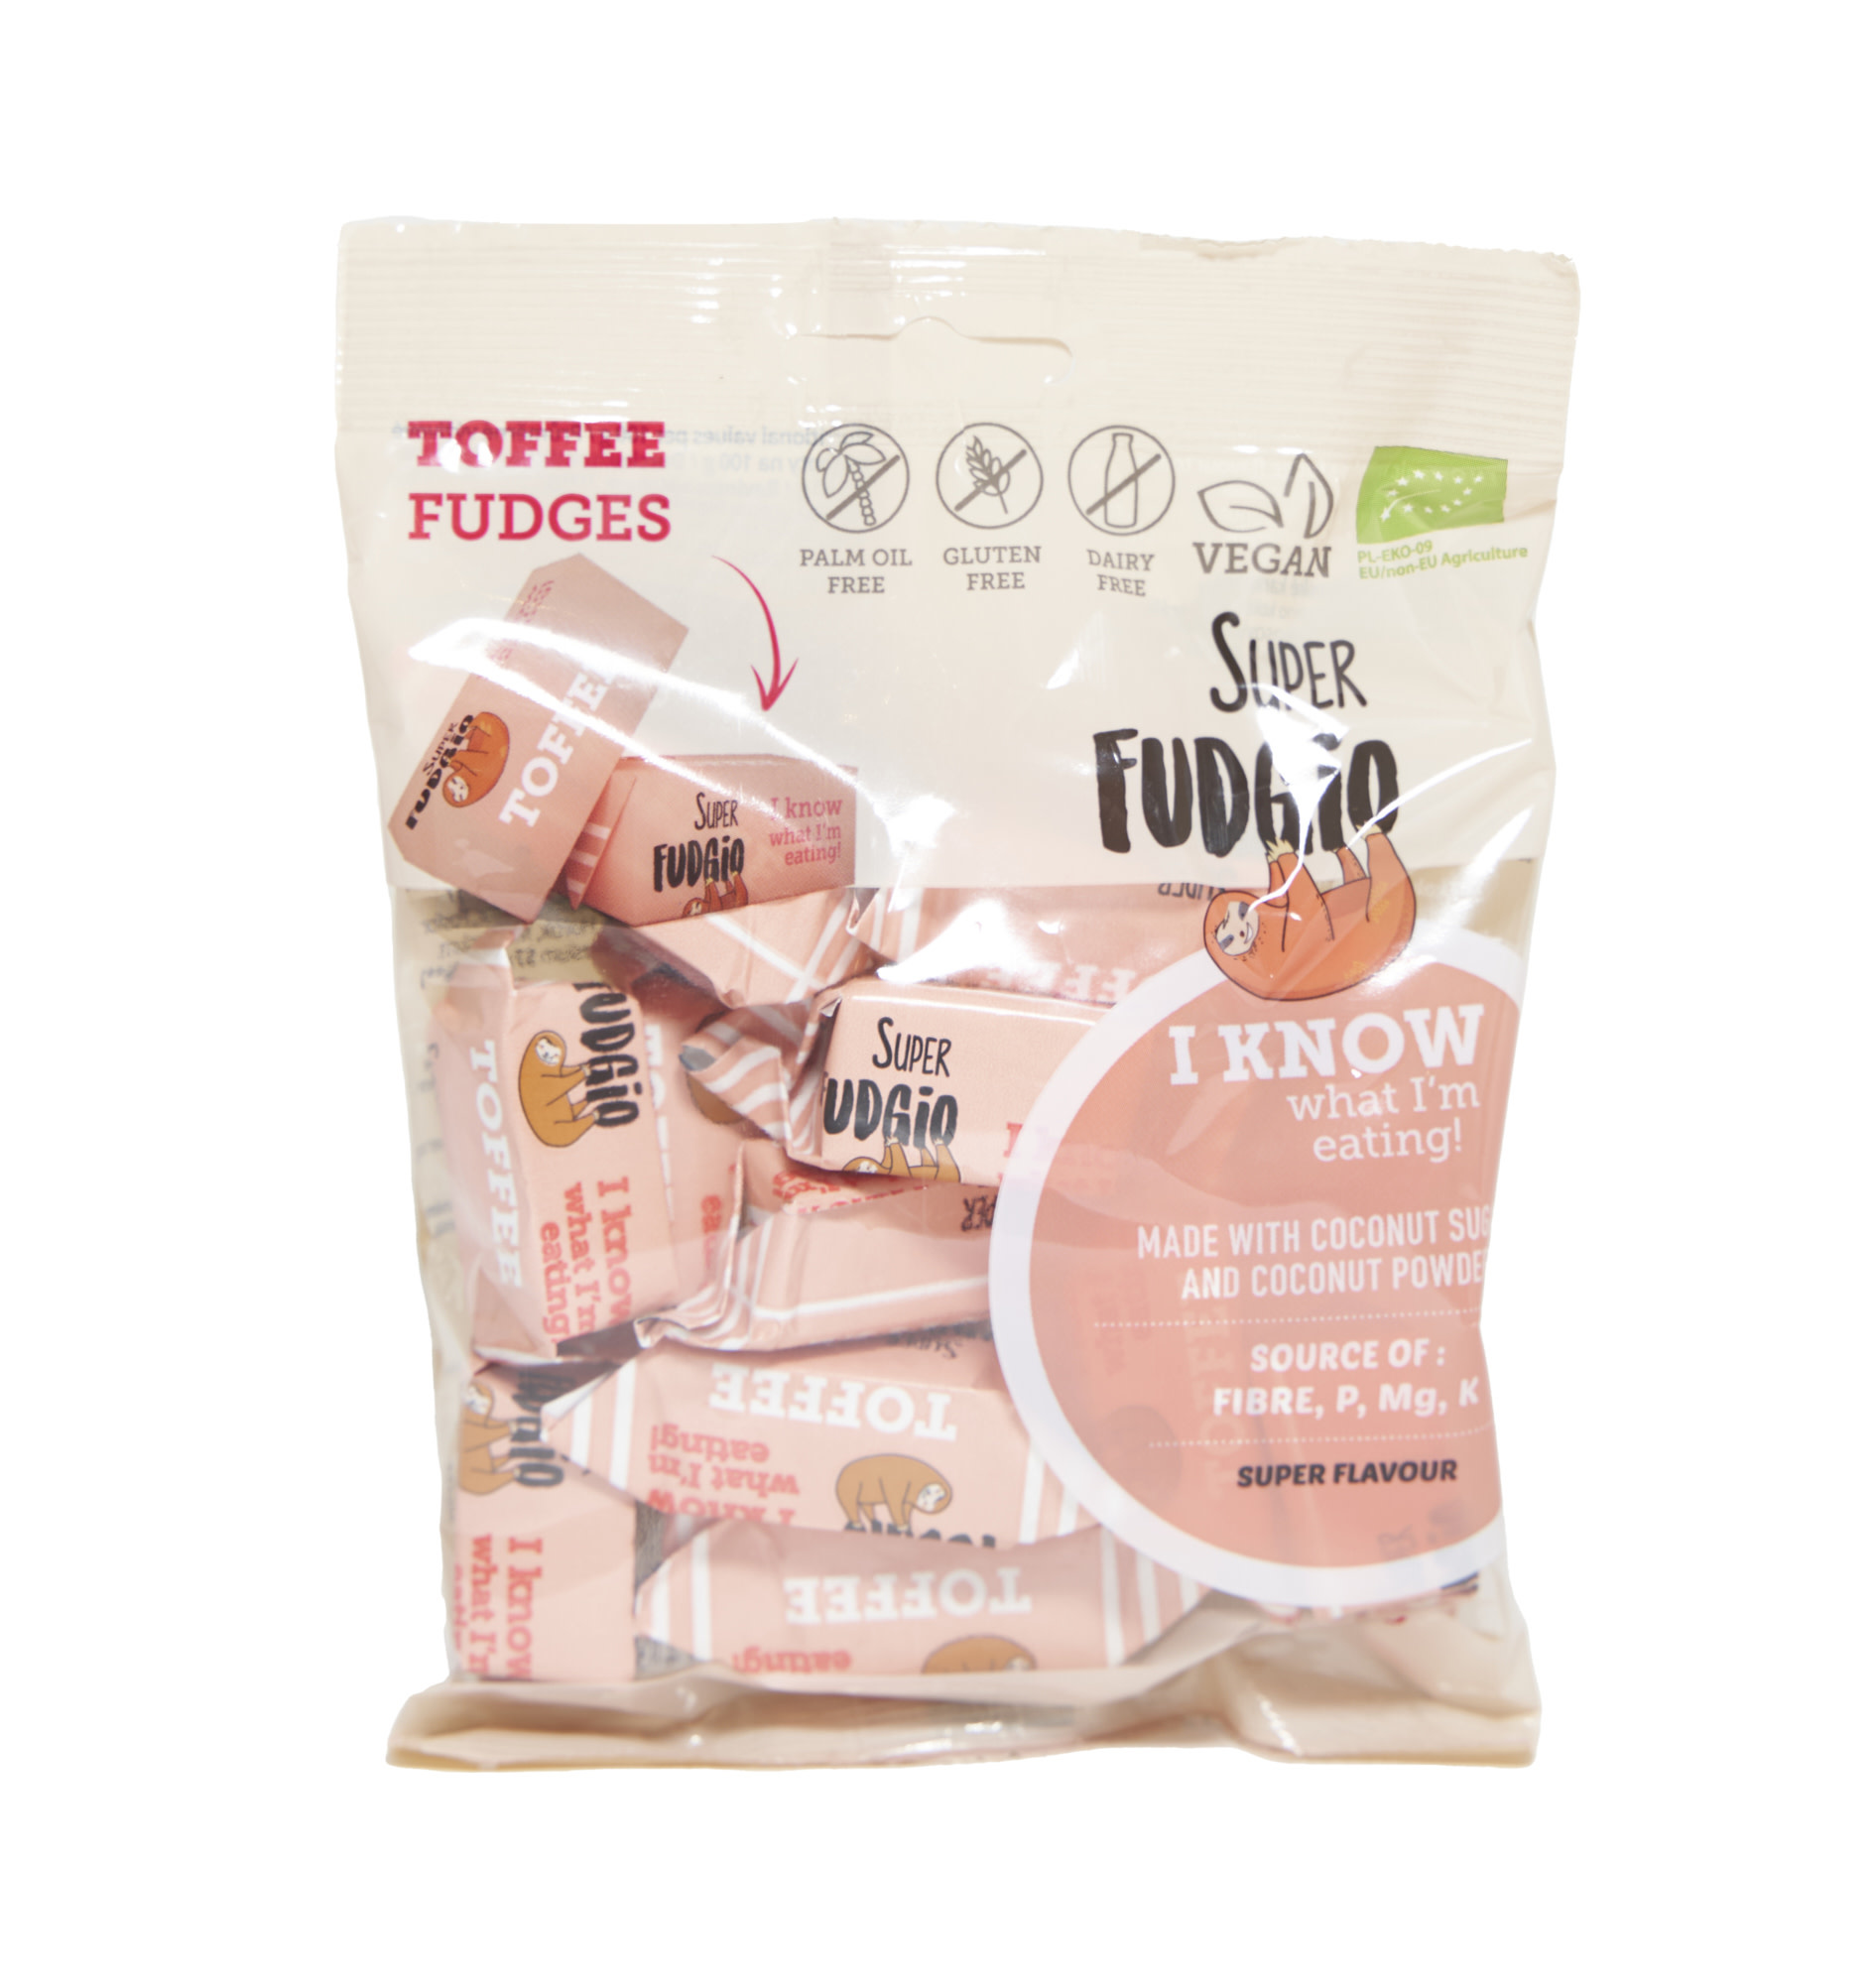 SUPER FUDGIO [V] Fudge with Toffee Flavour